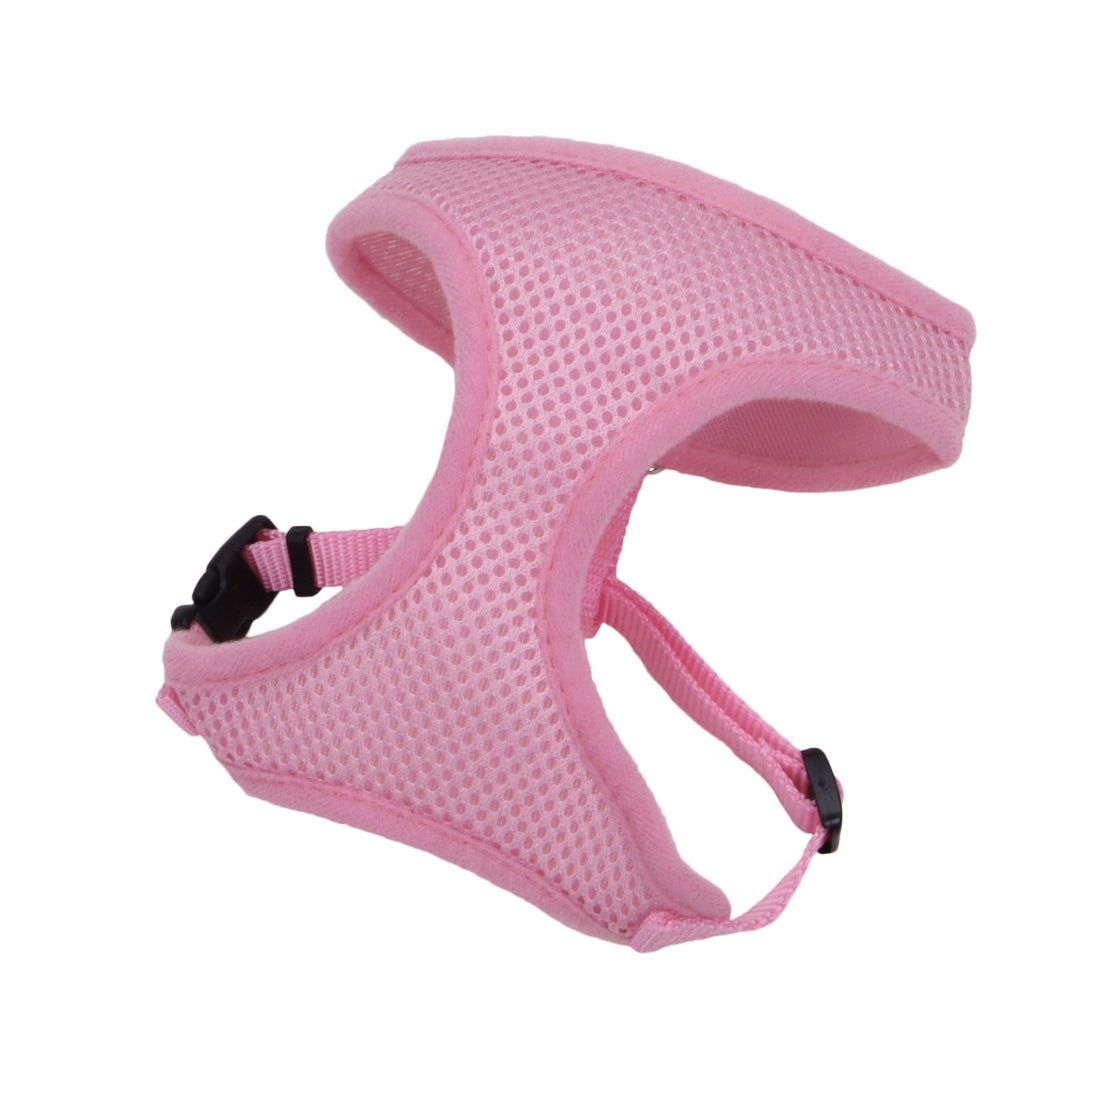 Coastal Comfort Soft Adjustable Harness Small Pink